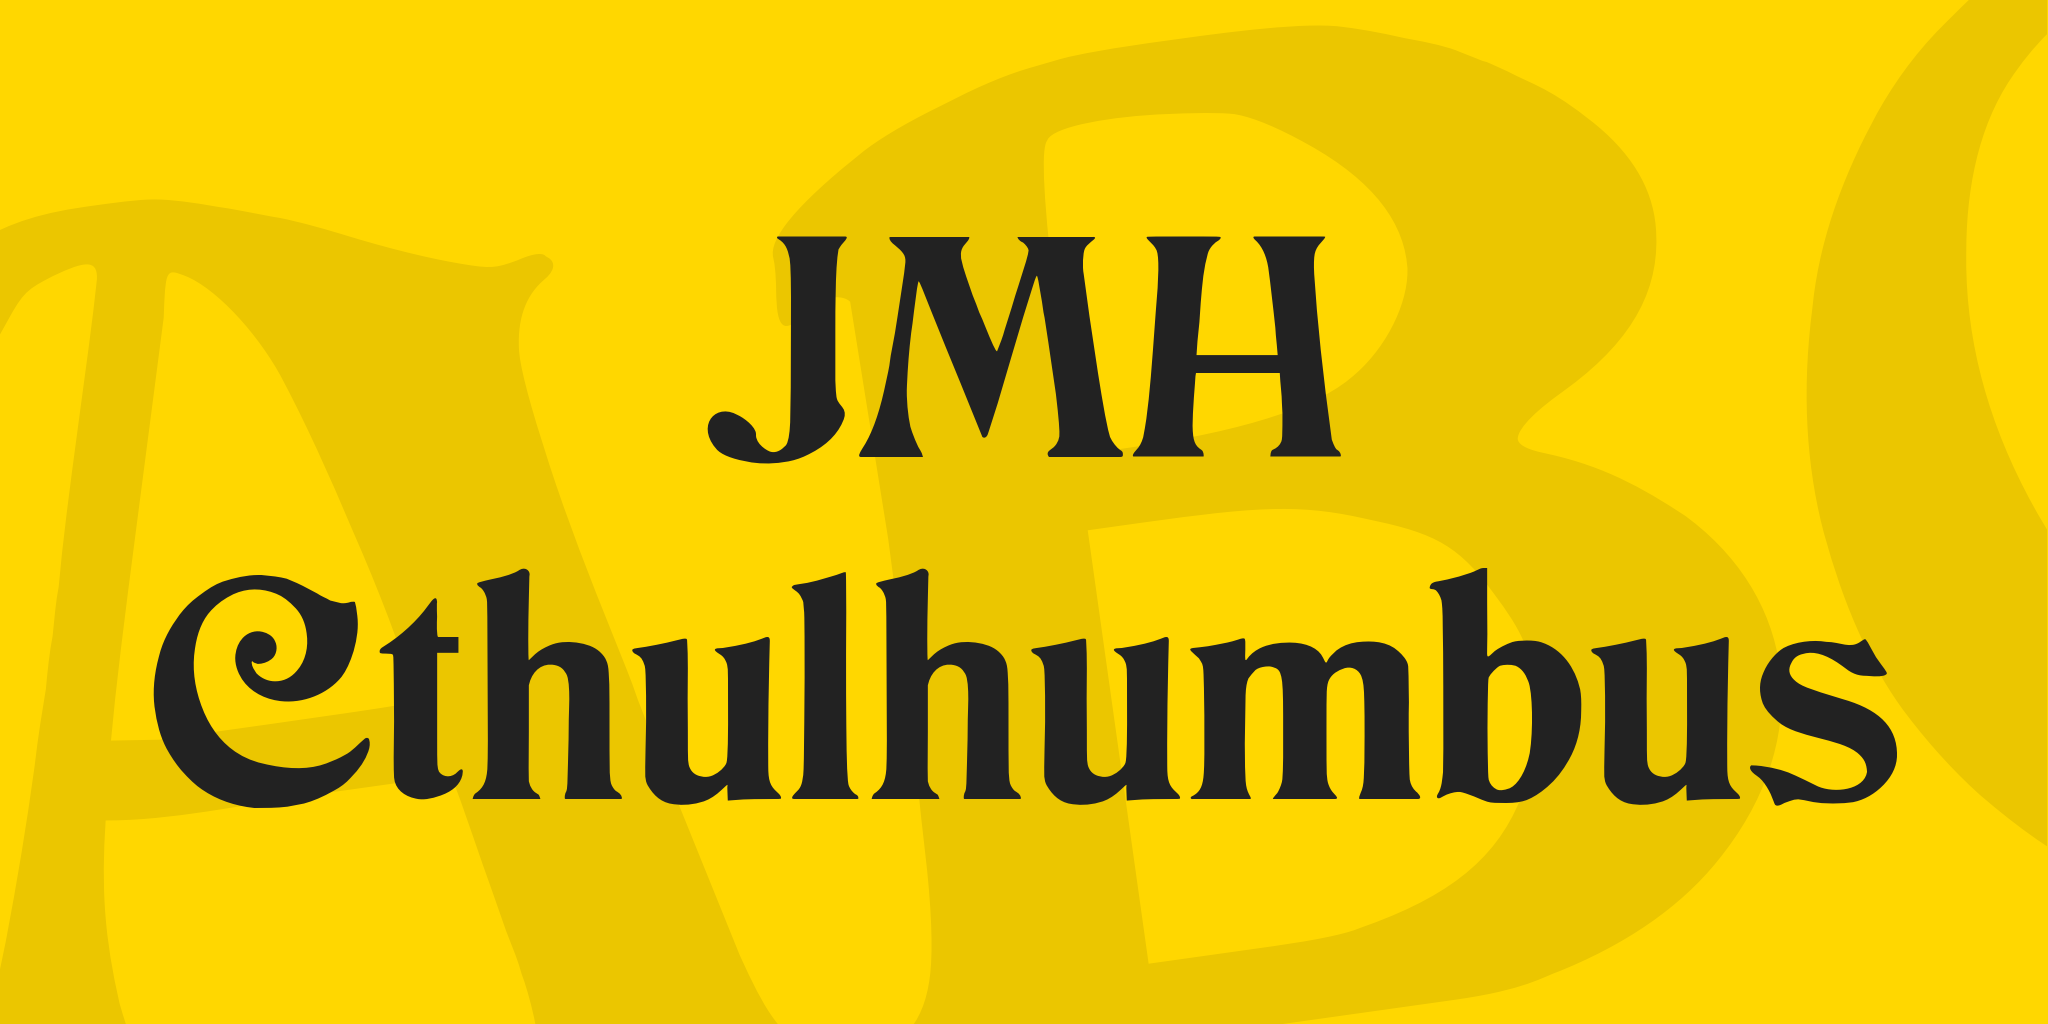 Jmh Cthulhumbus